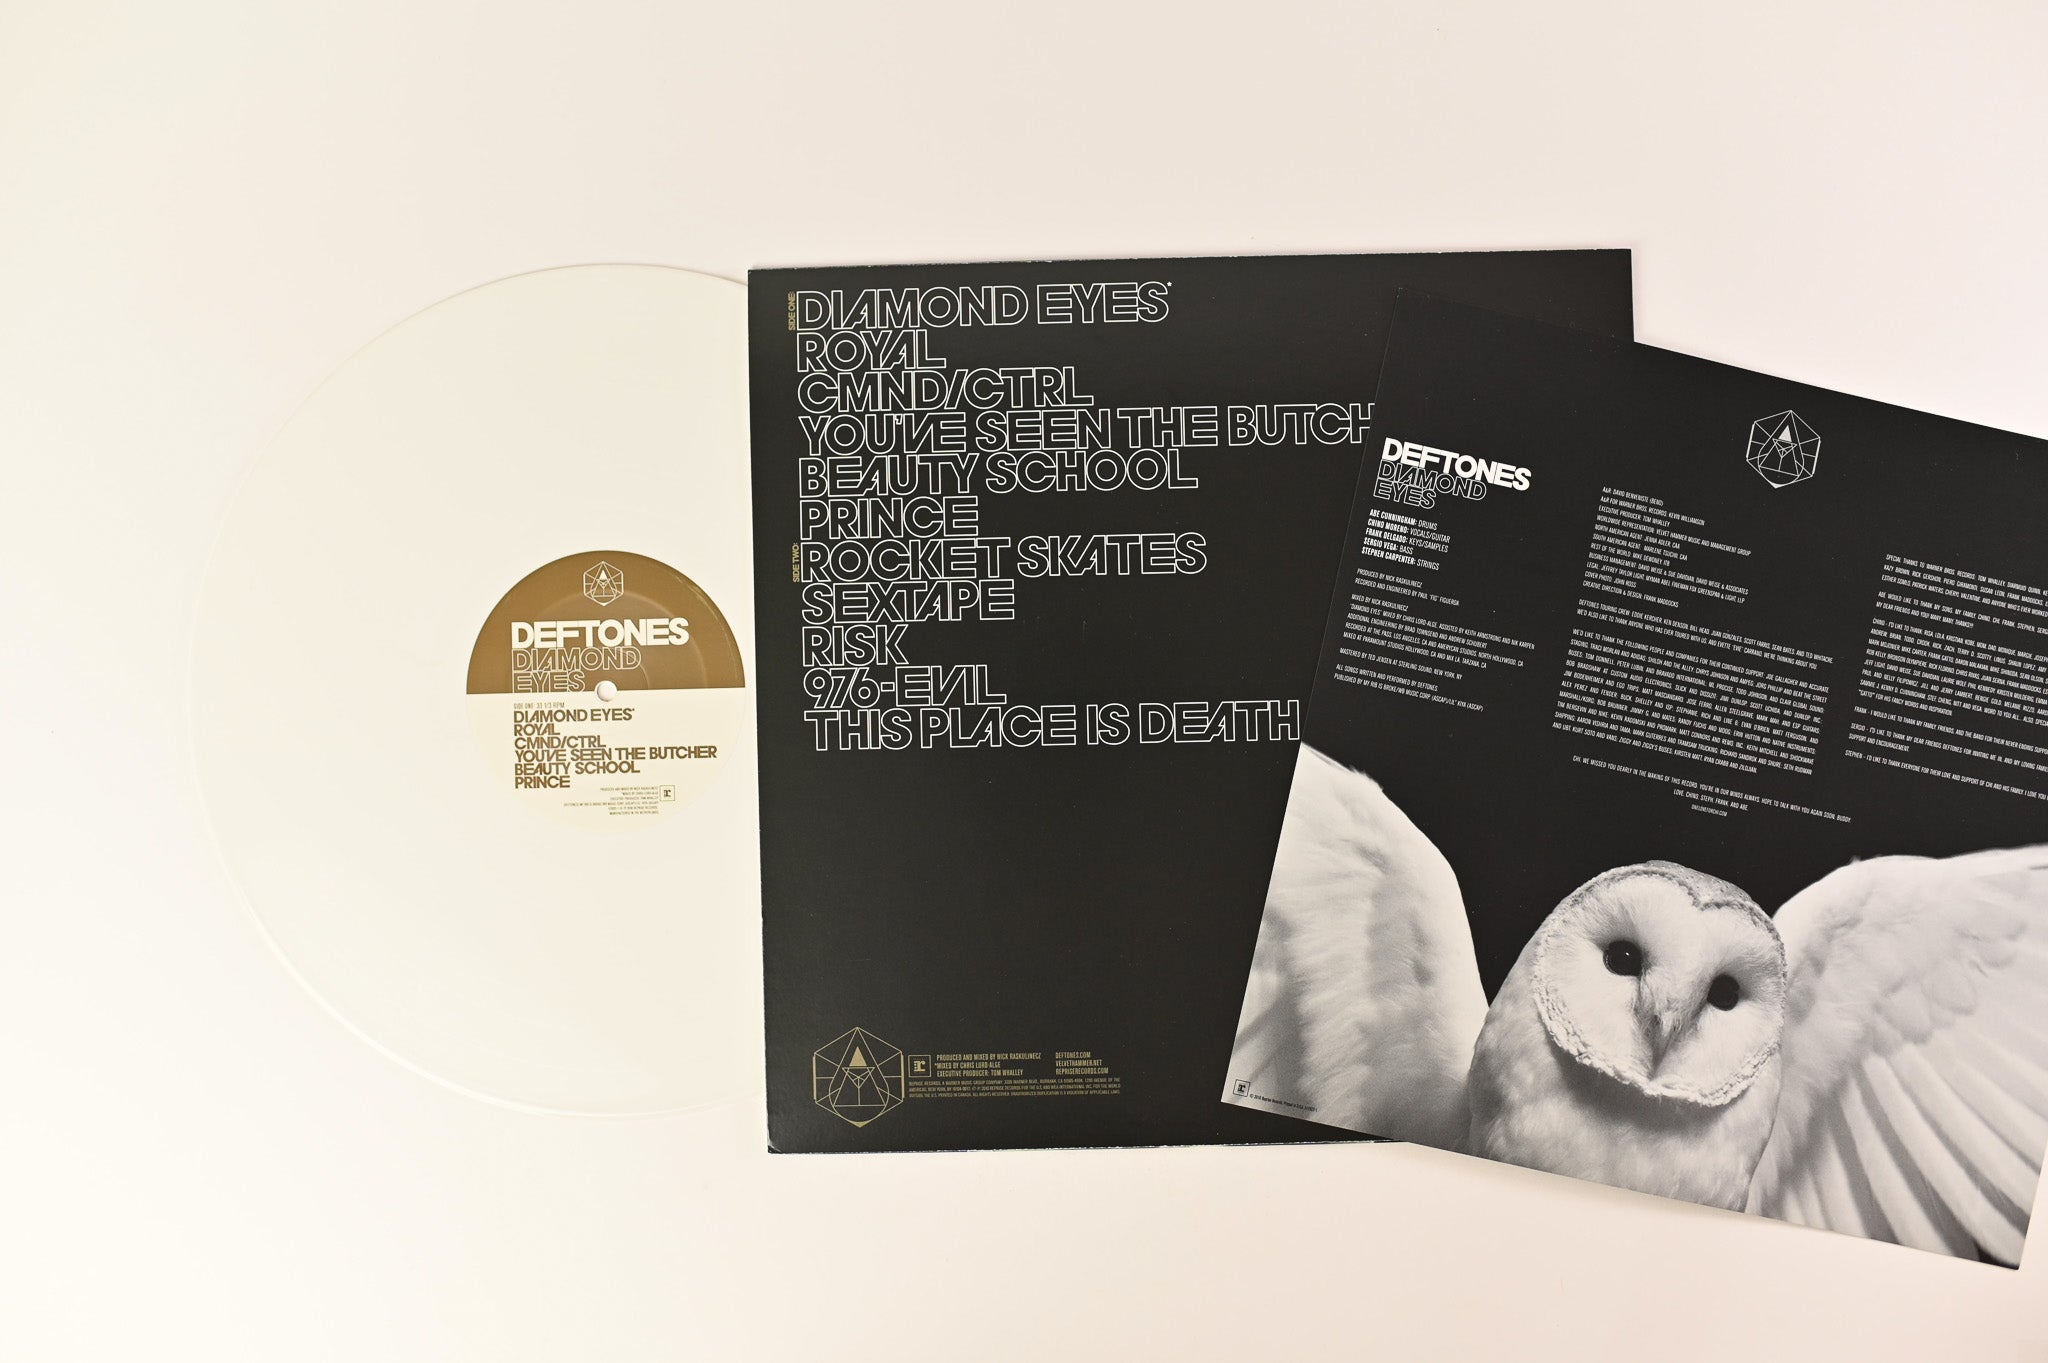 Deftones - Diamond Eyes LP Limited Edition White Vinyl In Shrink RARE Nice  Copy!